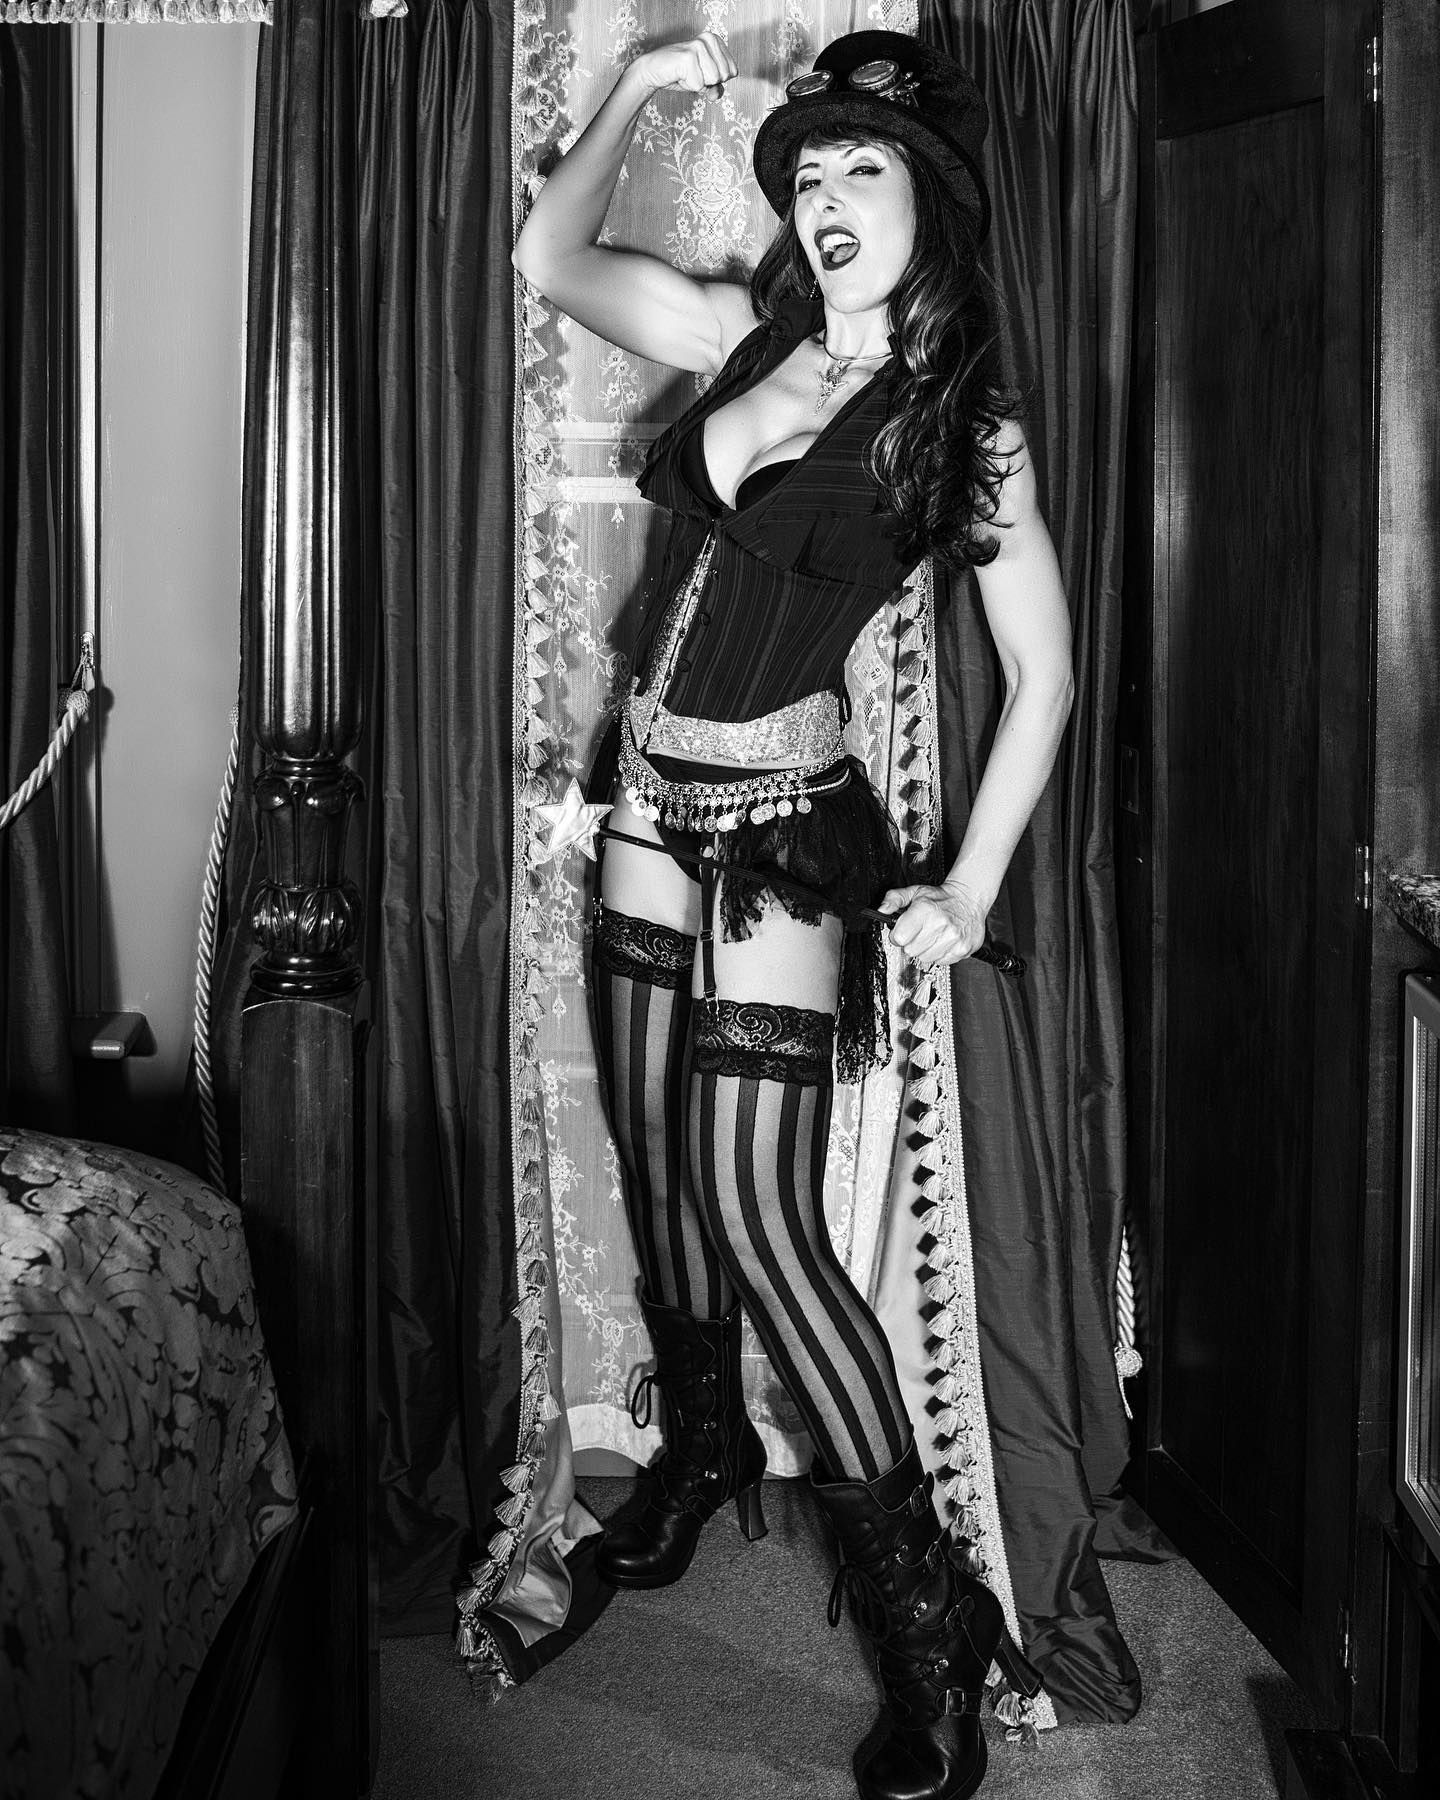 “Under her spell” shot with @tantricdominakm in London 🇬🇧
#steampunk #beautiful #goddess #beautifulwoman #cosplay #blackandwhitephotography #monochrome #nikon #nikknd610 #play